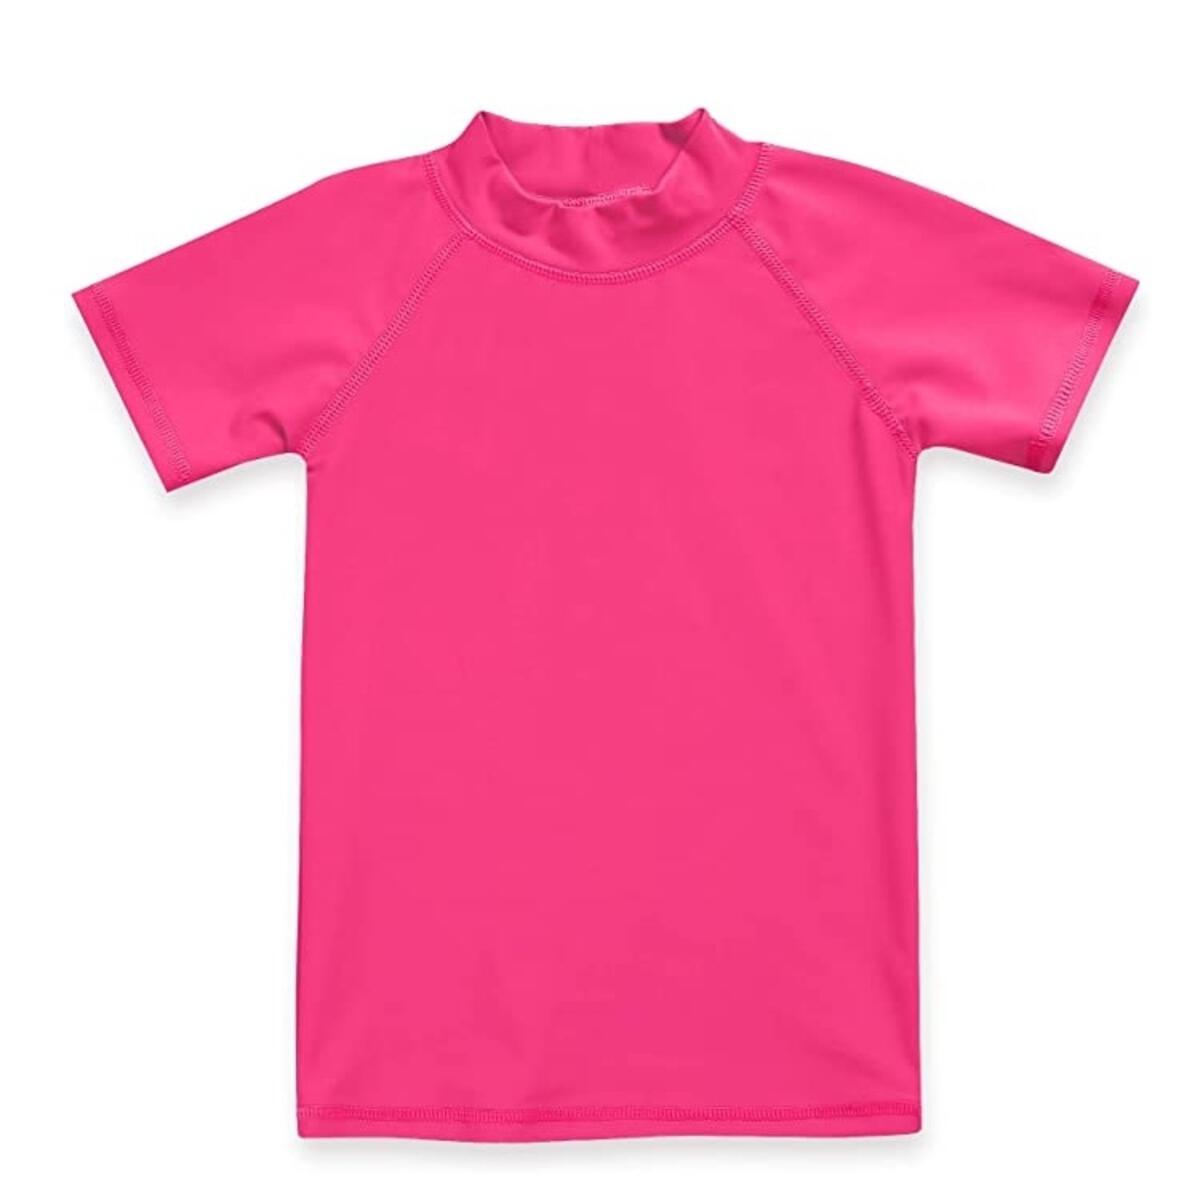 Hot Pink Short Sleeve Rash Guard Top